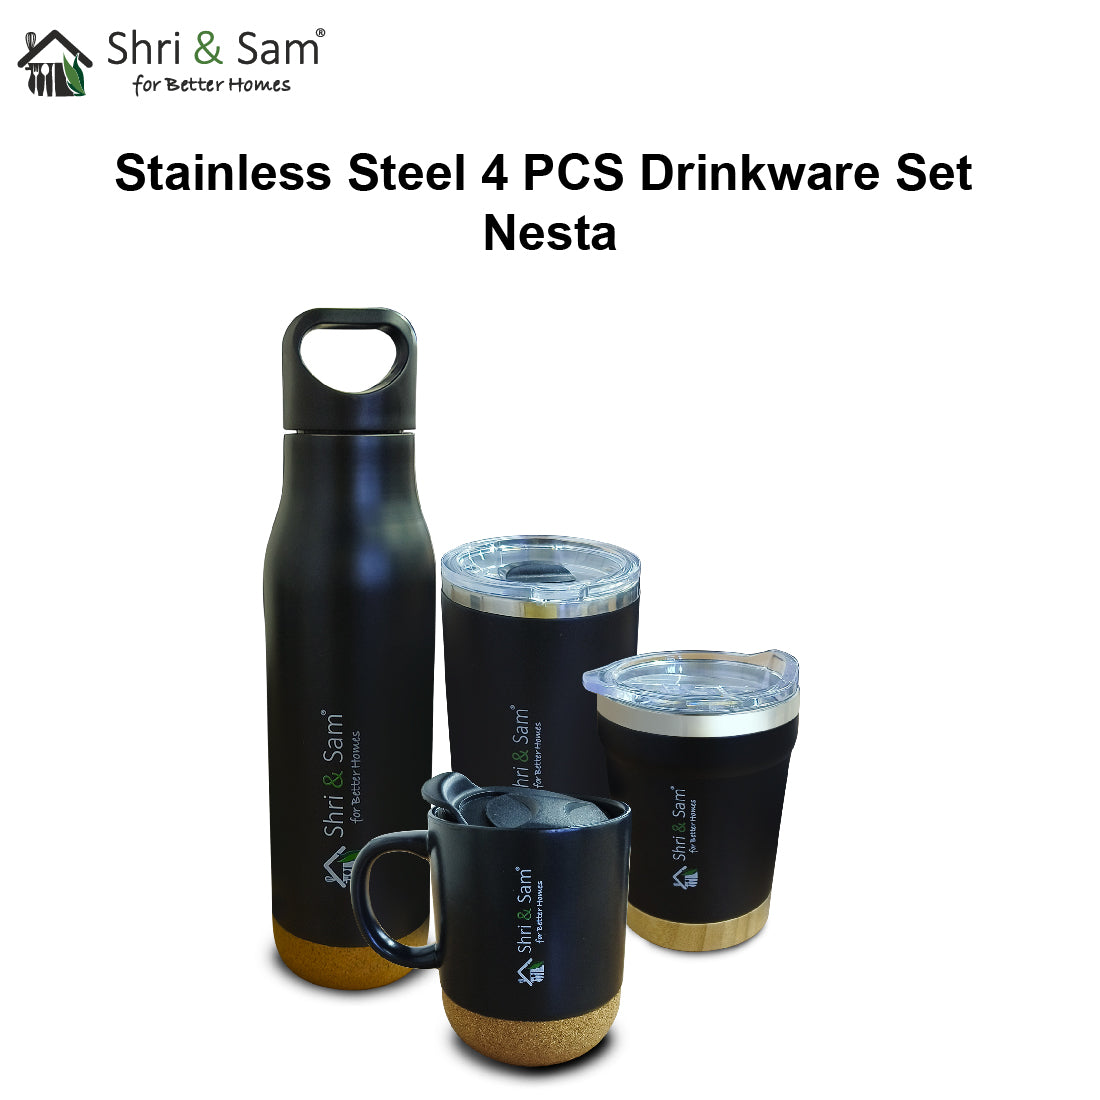 Stainless Steel 4 PCS Drinkware Set Nesta